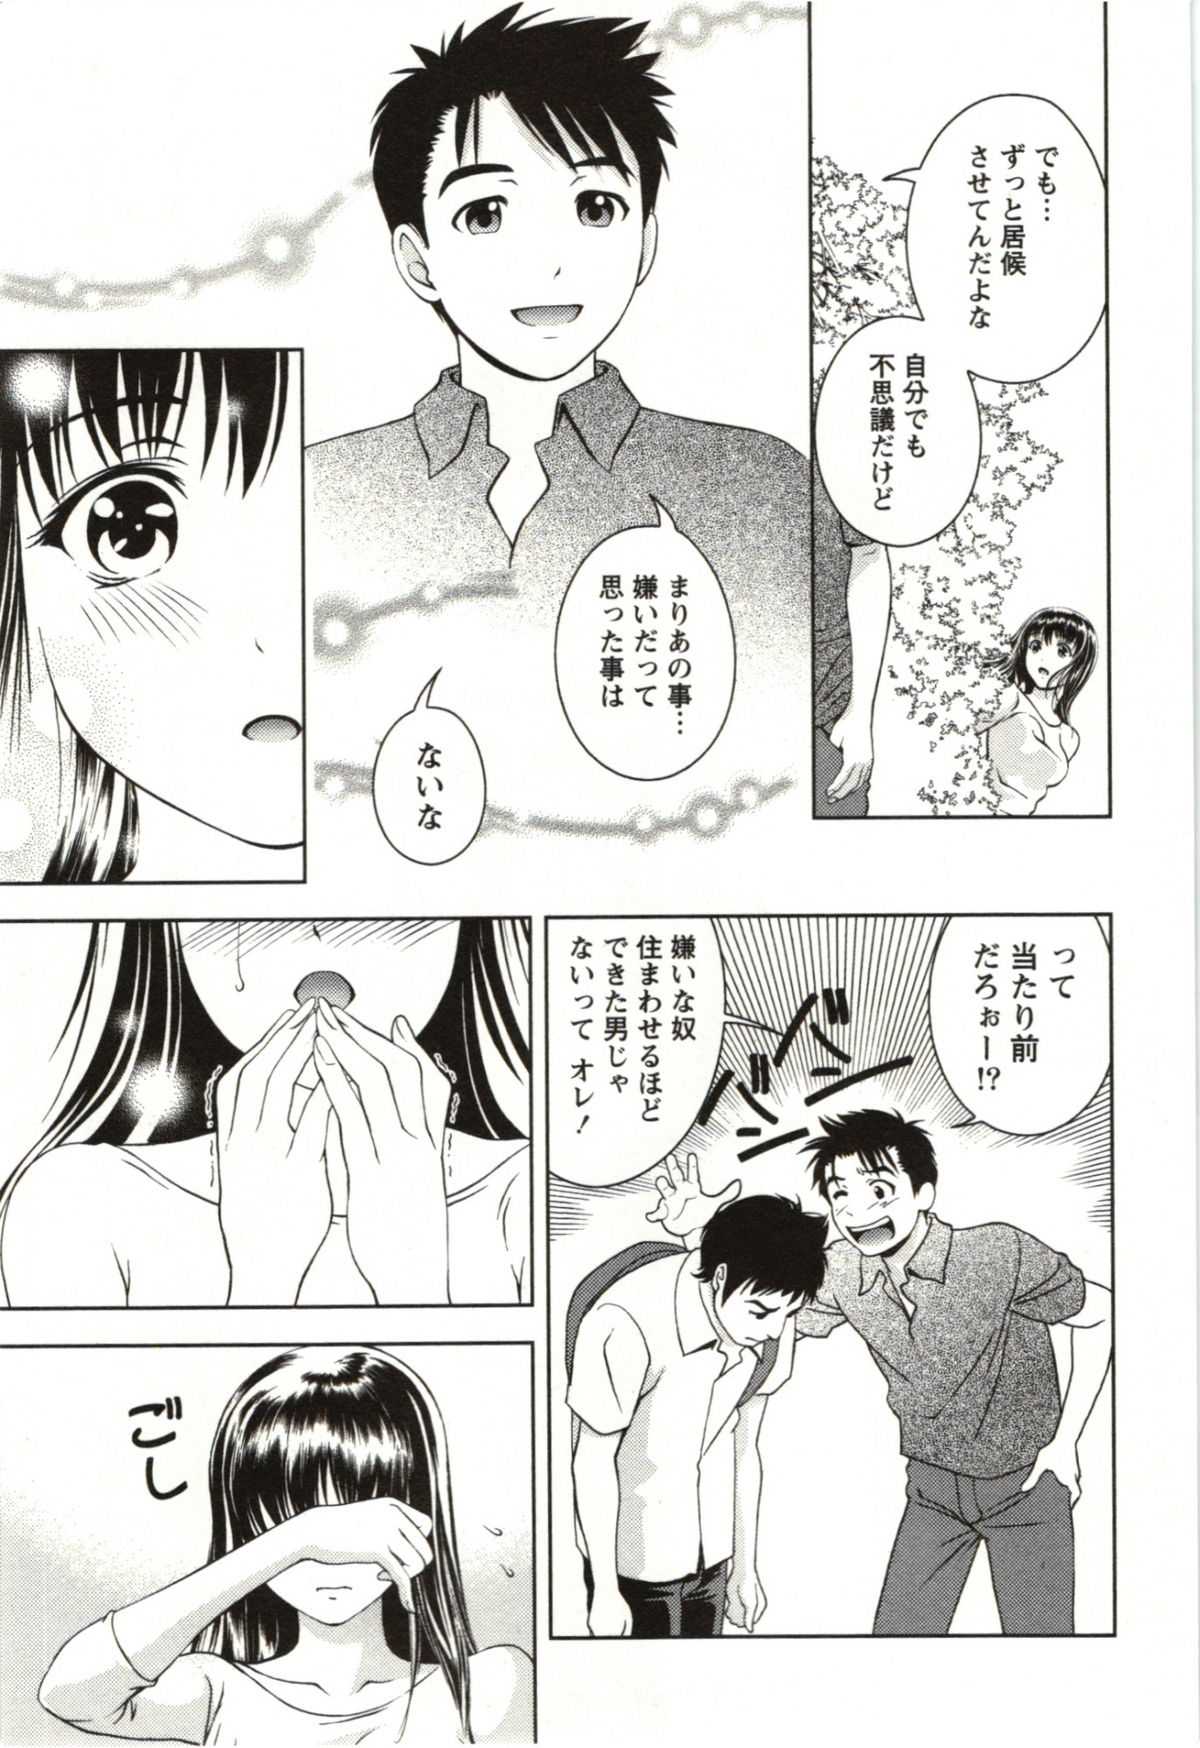 [Asamori Mizuki] Teach Me, Maria Vol.03 [朝森瑞季] おしえてまりあ 第03卷